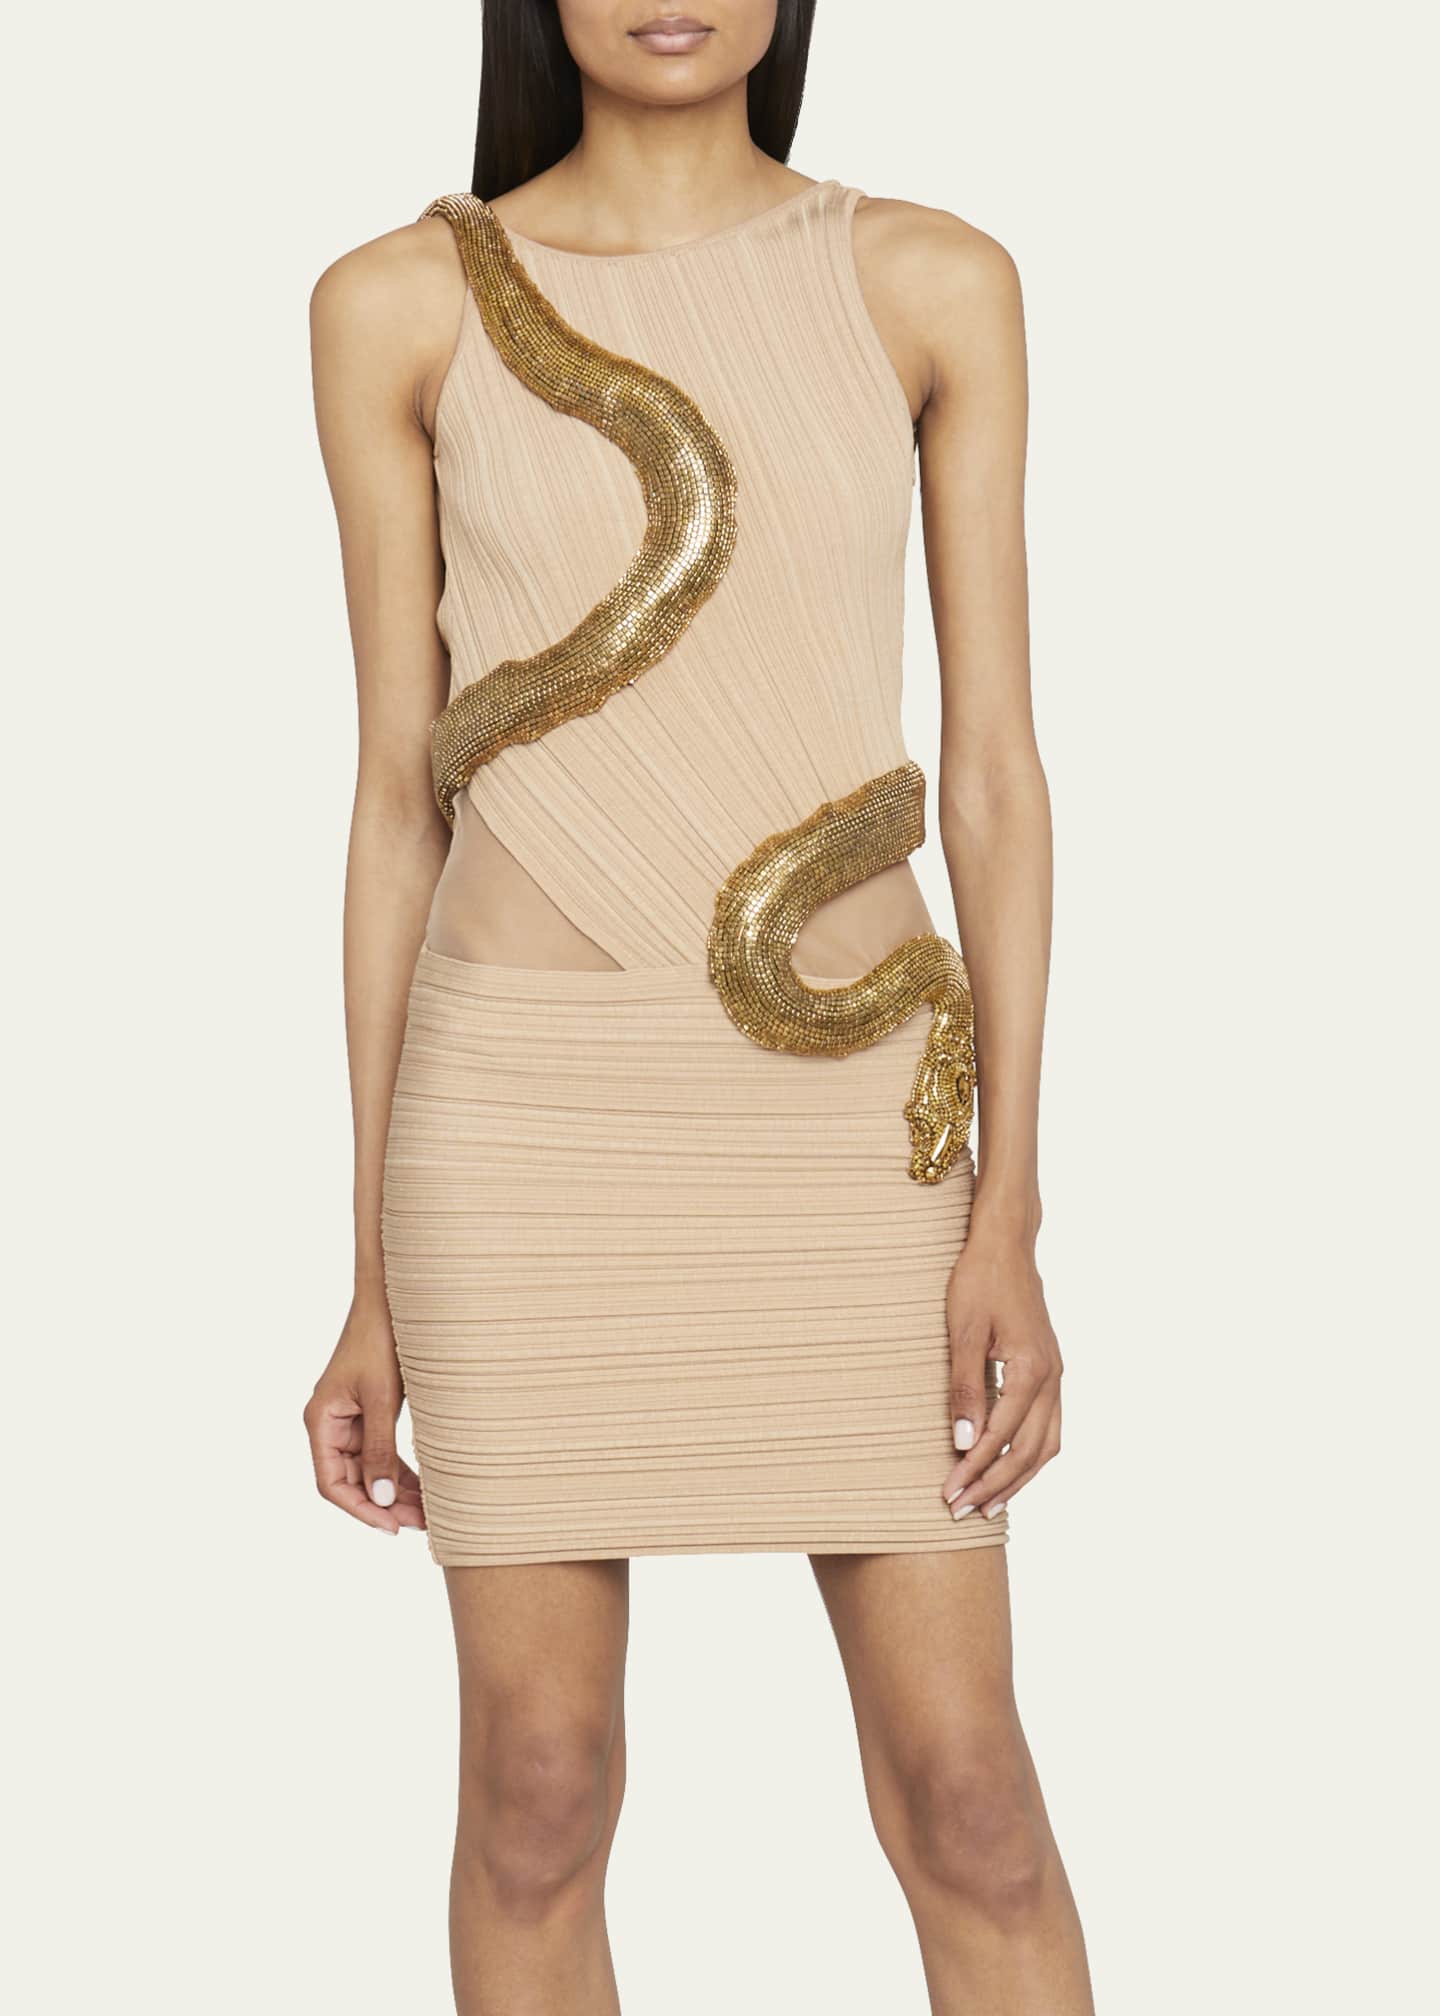 snake dress